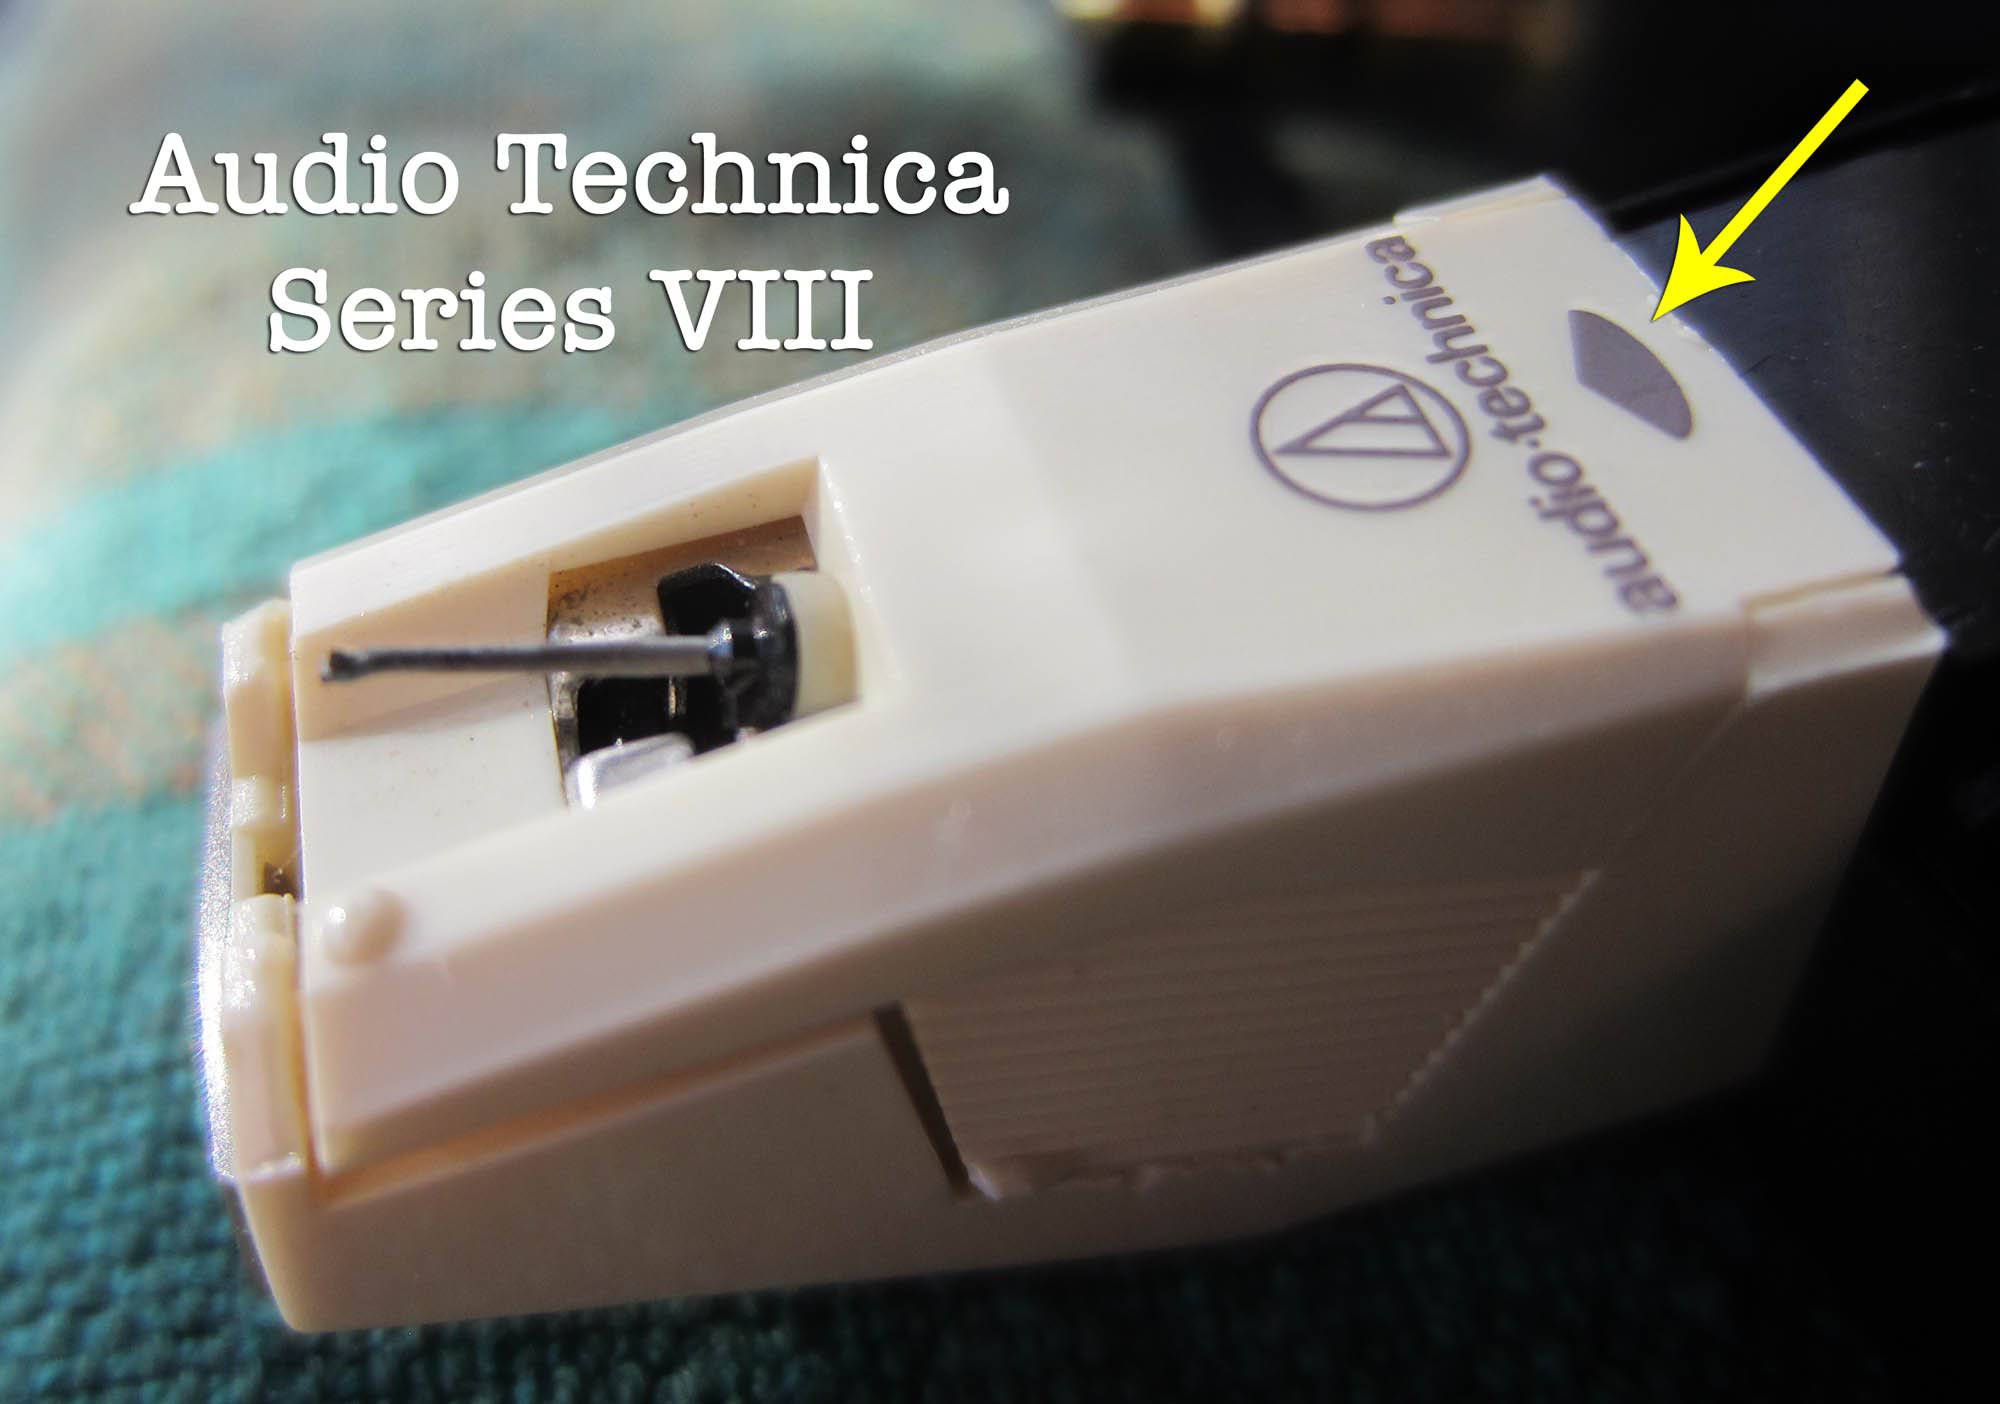 Audio Technica Series VIII